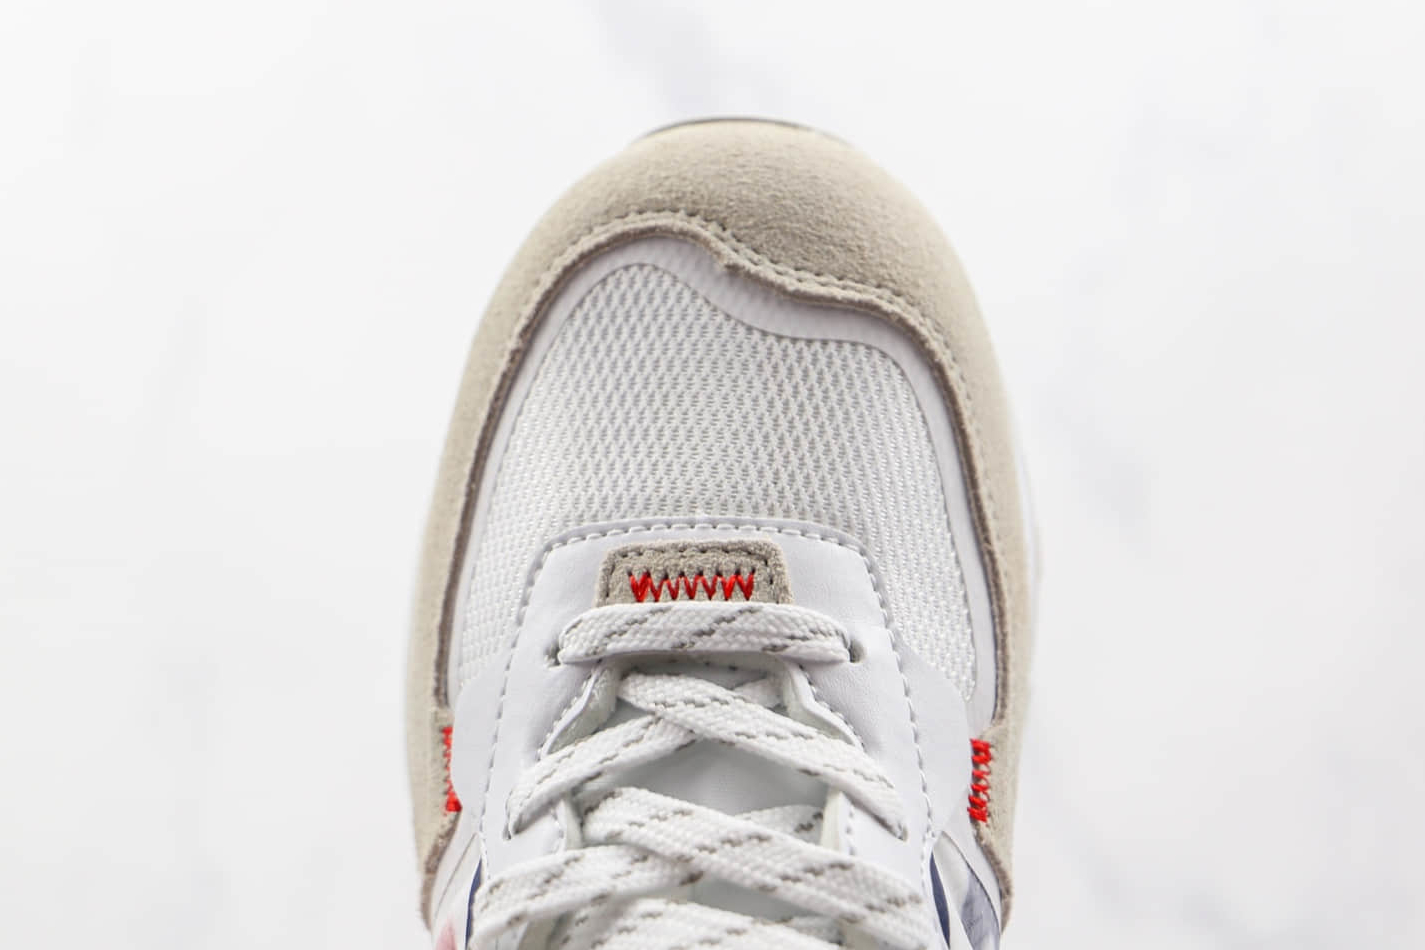 New Balance 574 White Natural Indigo - Stylish and Comfortable Footwear